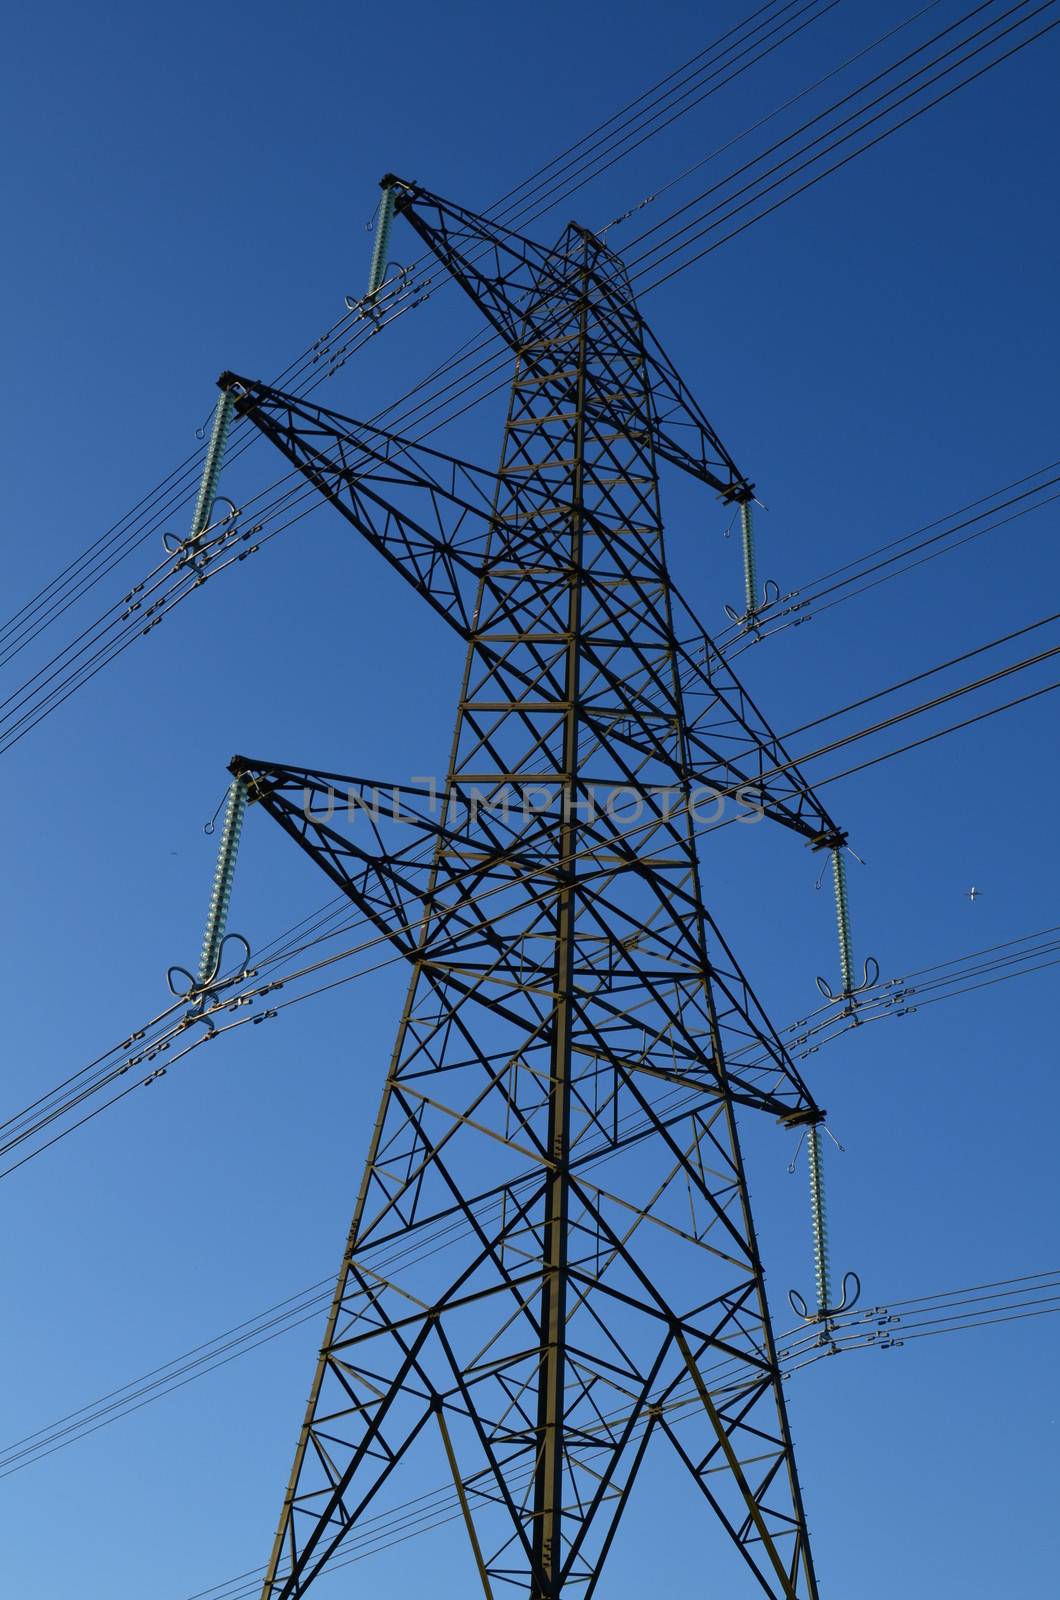 Power pylon in England under a blue sky.